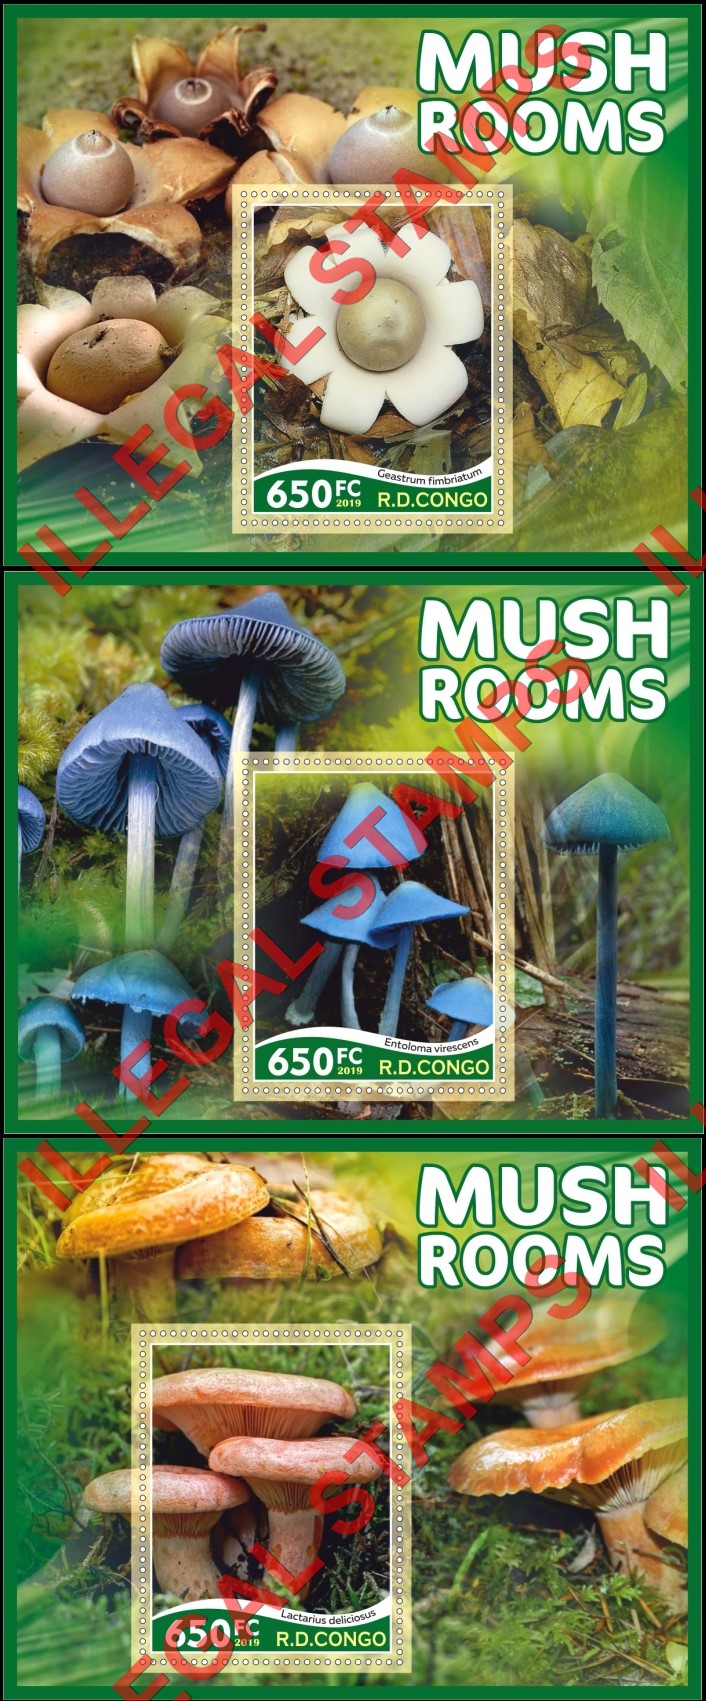 Congo Democratic Republic 2019 Mushrooms Illegal Stamp Souvenir Sheets of 1 (Part 1)